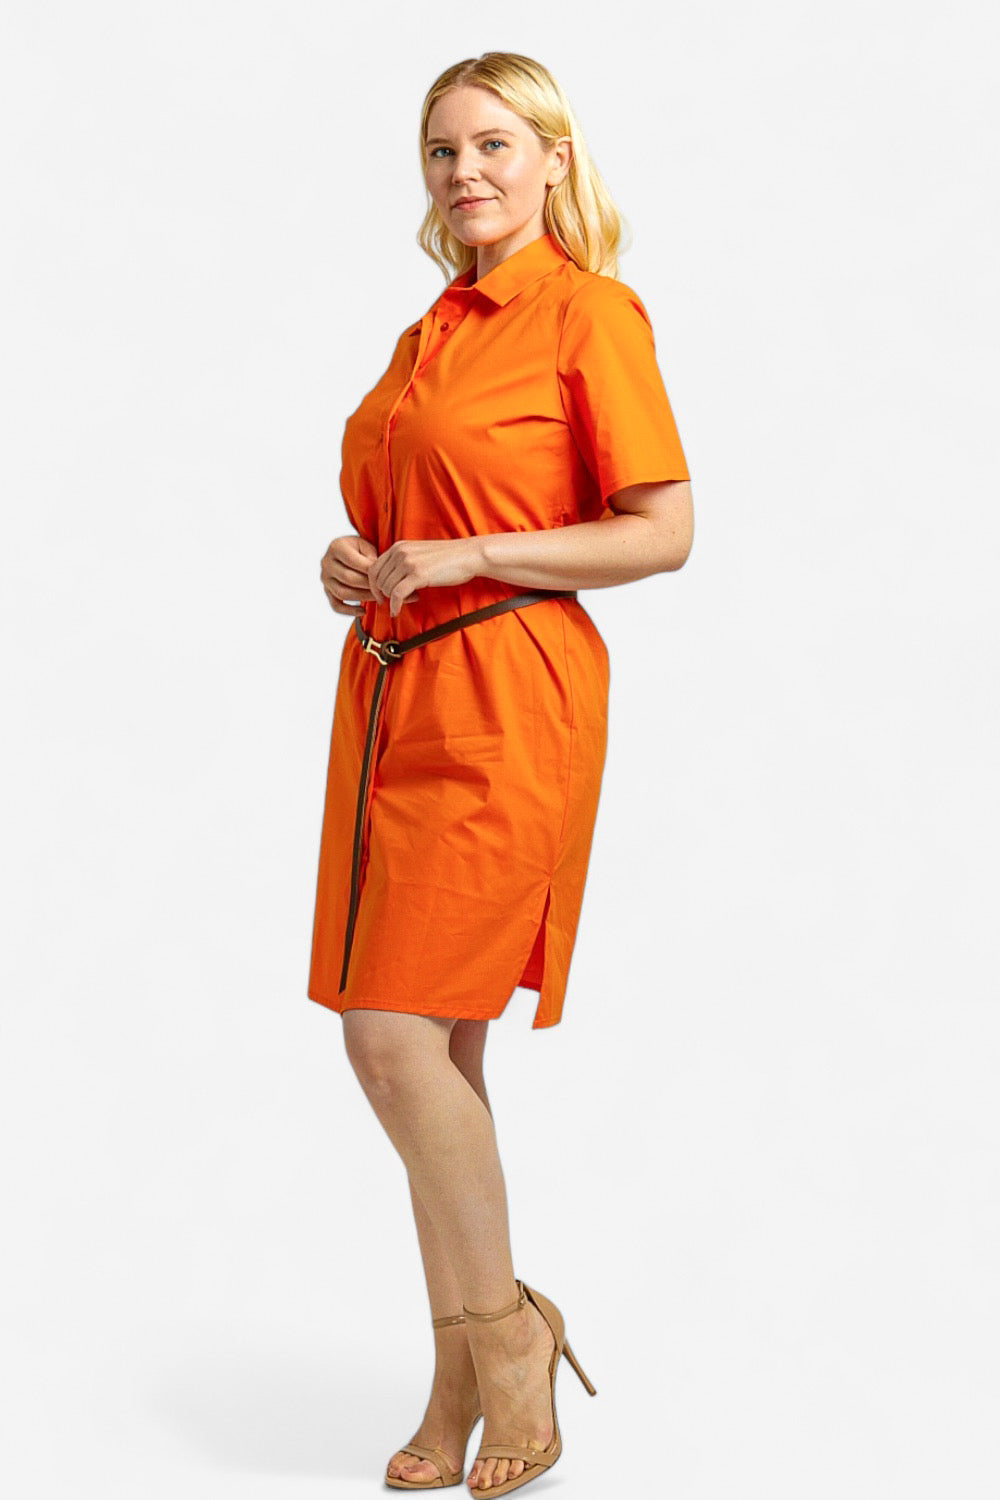 Carolina Plus Size Orange Cotton Utility Shirt Dress by Oltretempo Italian Women's Fashion